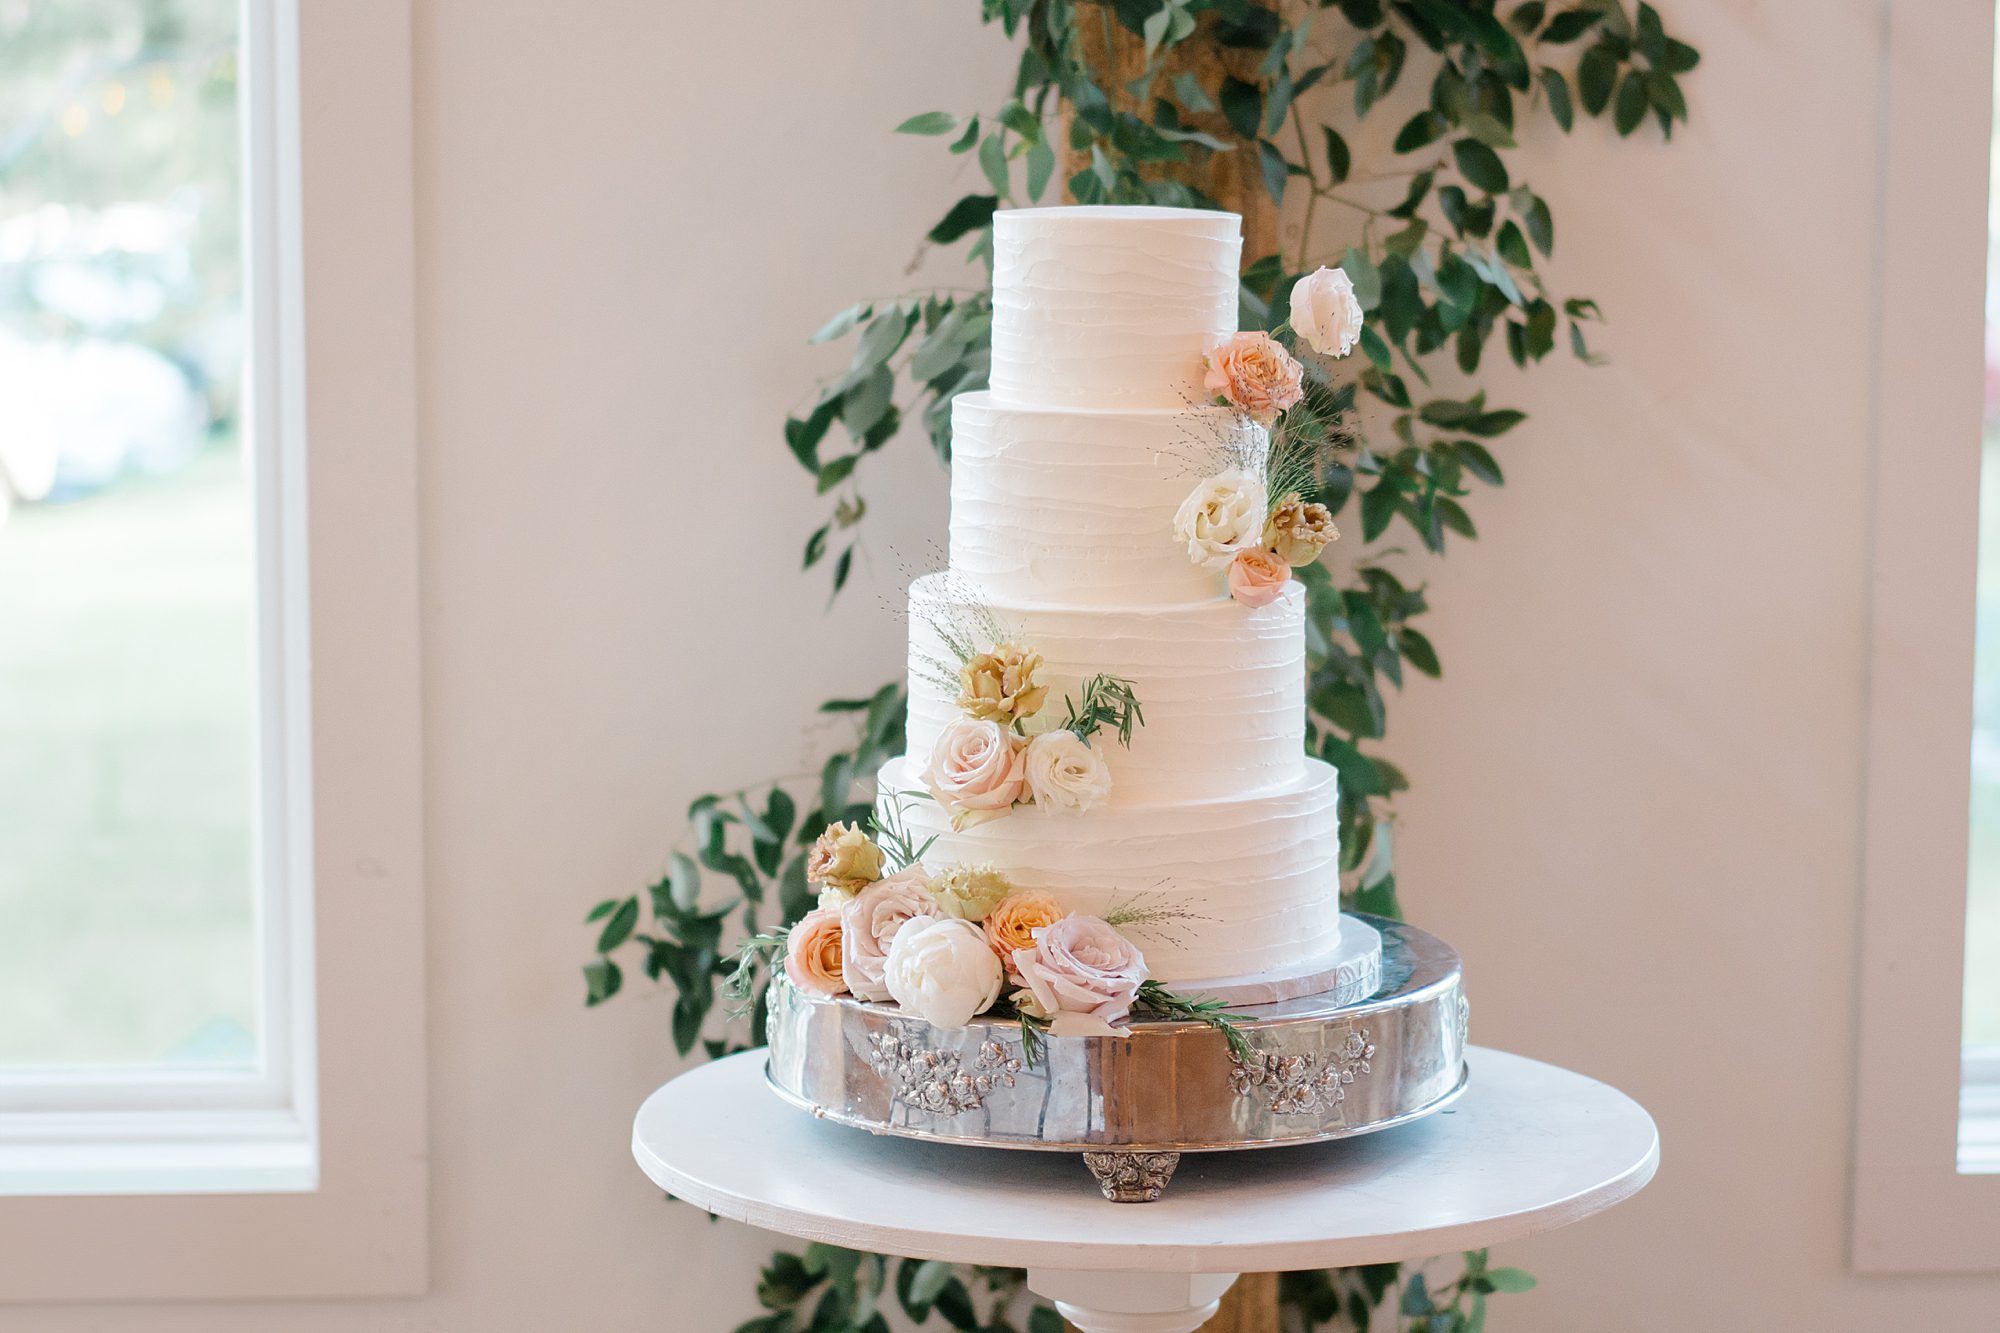 4 tiered wedding cake